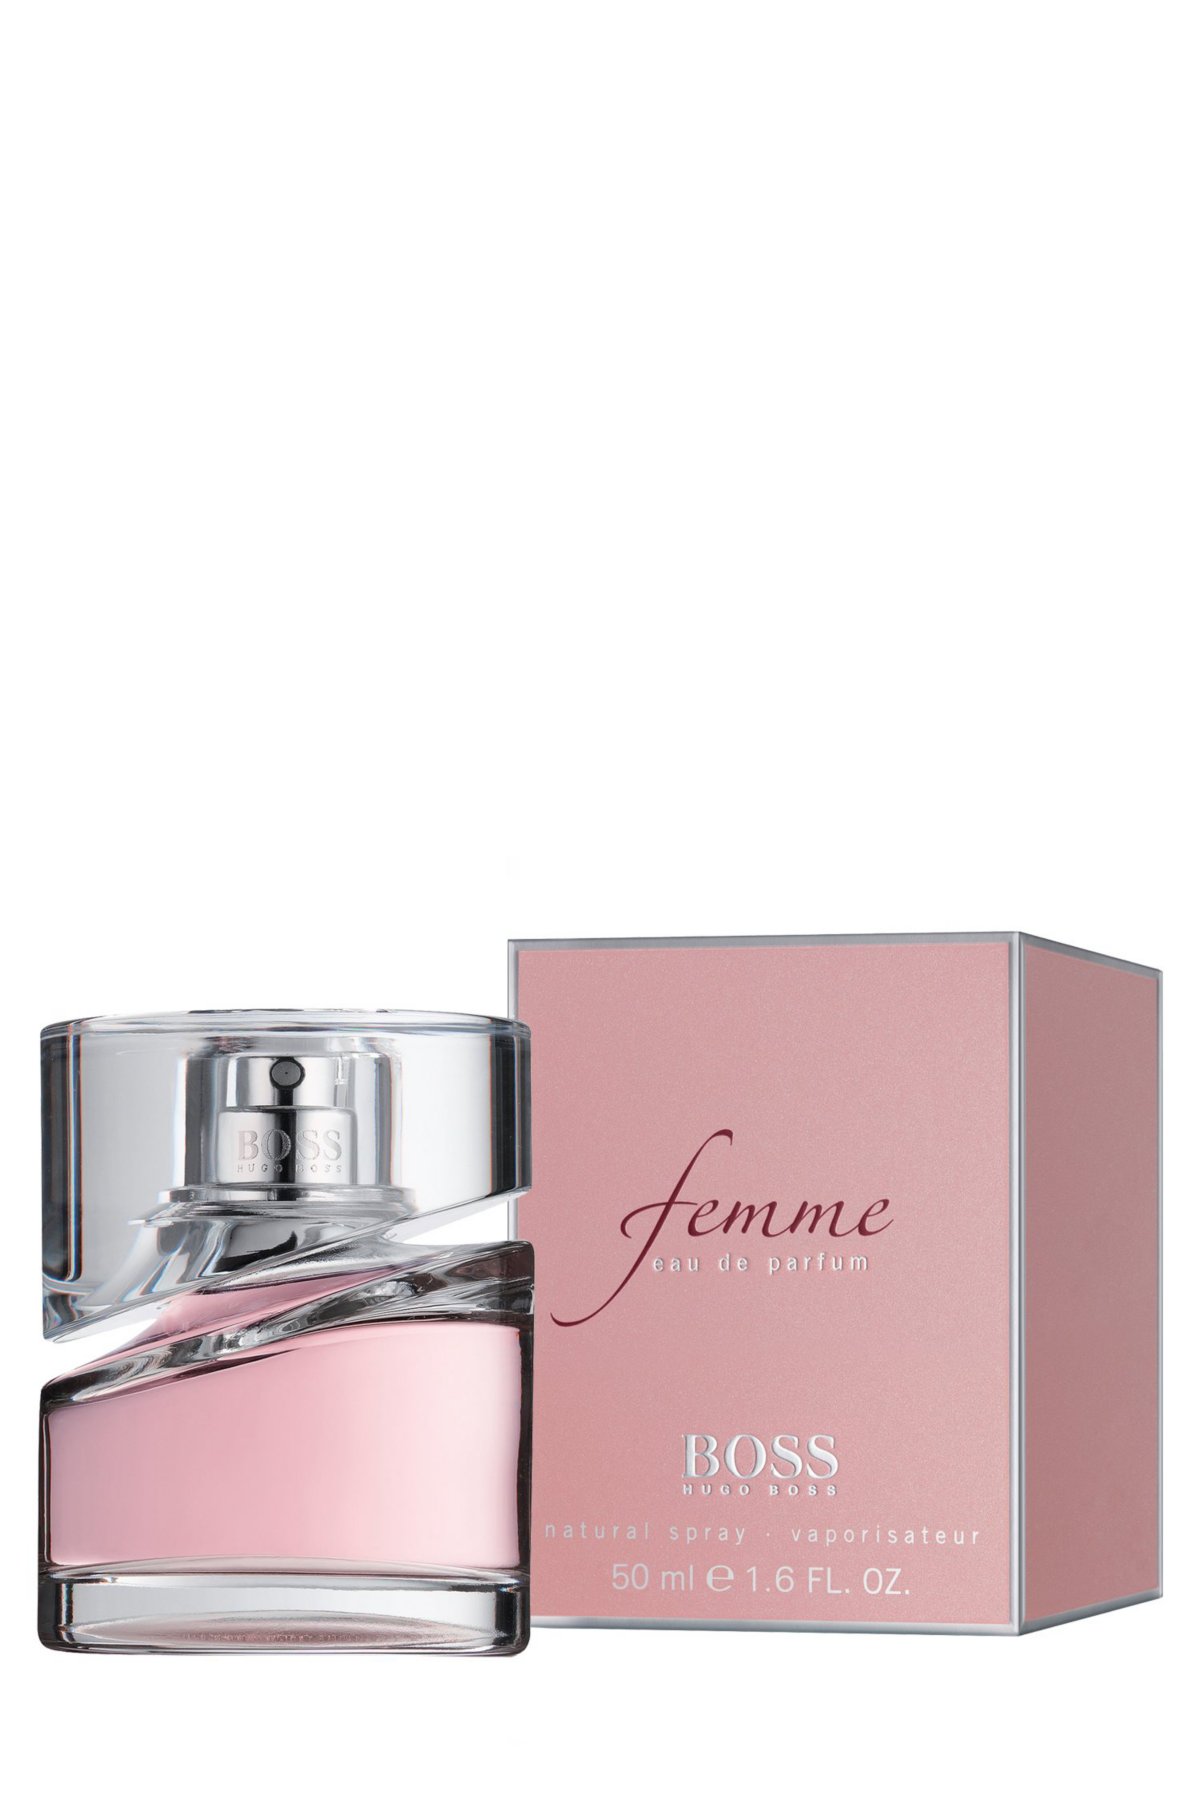 Femme by BOSS eau de parfum 50ml, Assorted-Pre-Pack